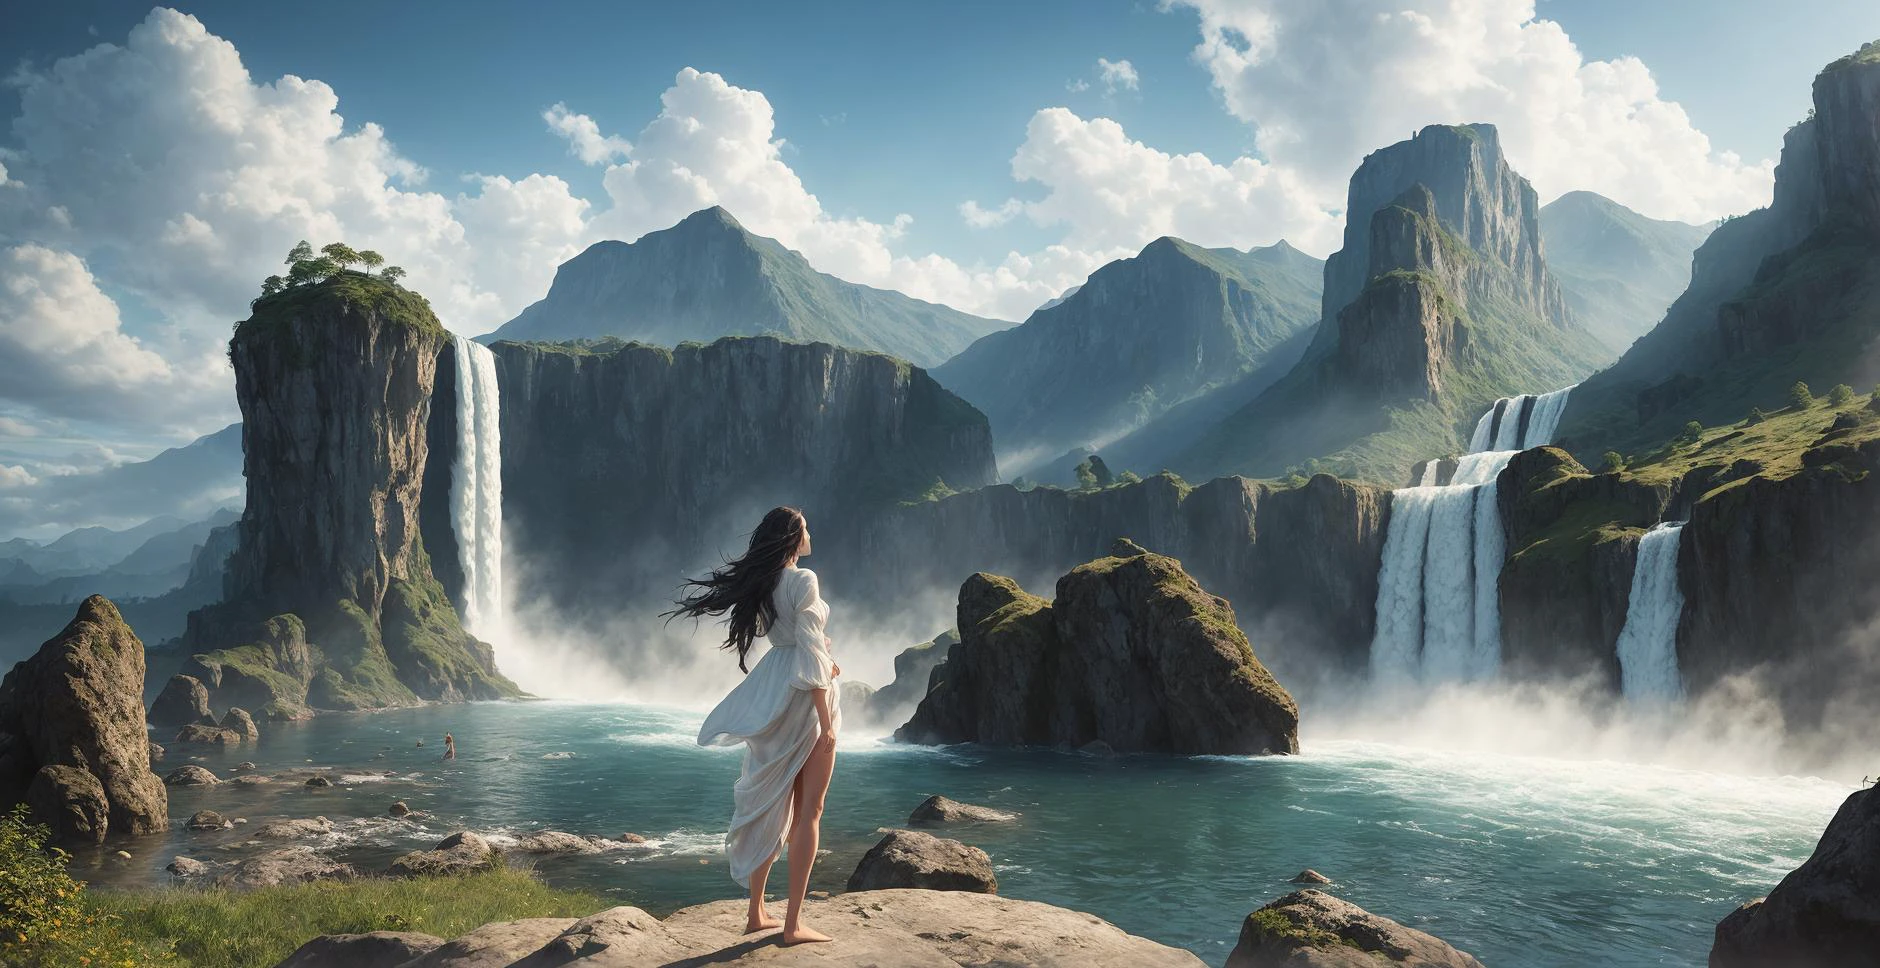 a woman in a สีขาว dress ยืน on a cliff with a waterfall in the background and a waterfall flowing from her, คลินท์ ซีร์ลีย์, มายากลการรวบรวมงานศิลปะ, ภาพวาดด้านที่มีรายละเอียด, ศิลปะแฟนตาซี,เท้าเปล่า, คลาวด์, คลาวด์y_ท้องฟ้า, ลอยตัว_ผม, ยาว_ผม, black ผม,ชาย_จุดสนใจ, ภูเขา, กลางแจ้ง, ท้องฟ้า, ตามลำพัง, ยืน, สีขาว_ผม, กว้าง_แขนเสื้อ, ลม,
เอชดีอาร์, (ภาพเหมือนจริง, คุณภาพชิ้นเอก, คุณภาพดีที่สุด),